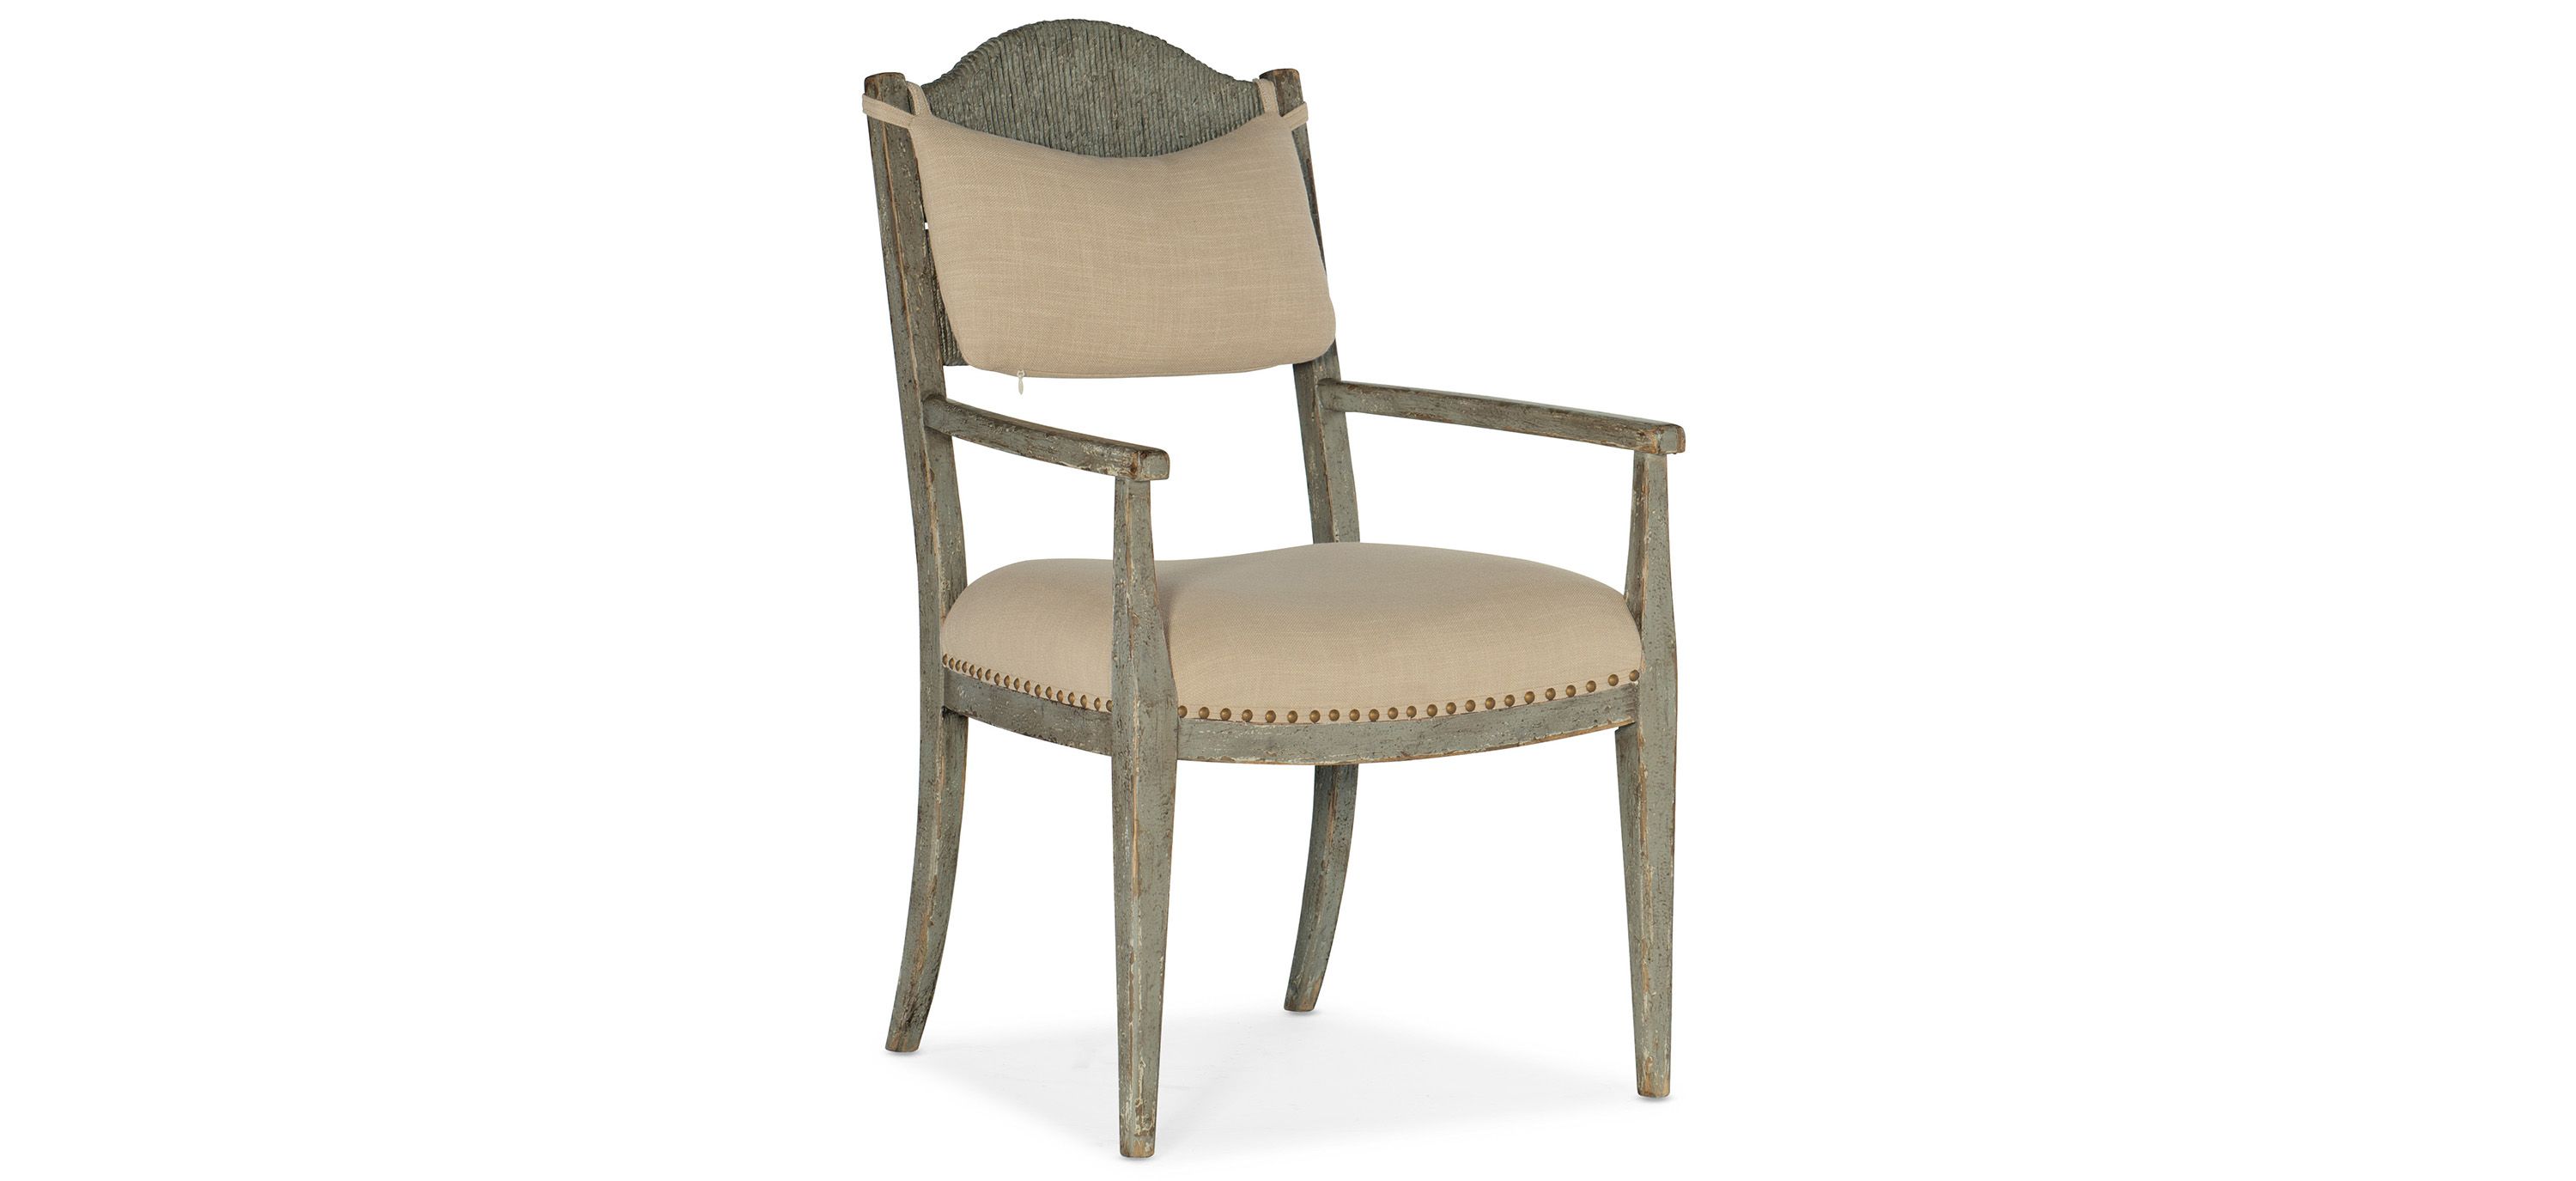 Alfresco Aperto Rush Arm Chair - Set of 2